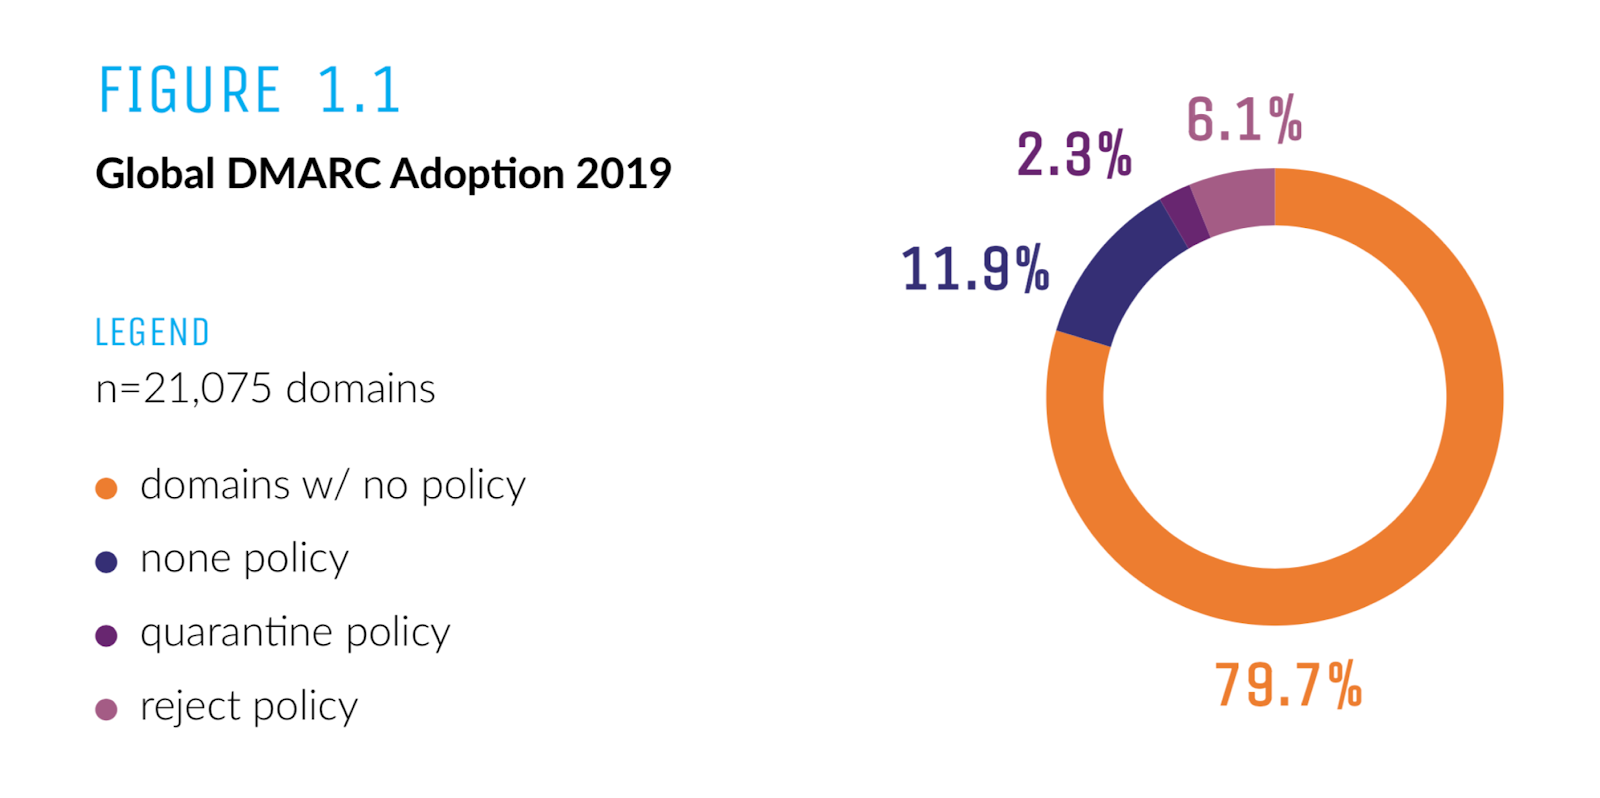 Global DMARC adoption rates through 2019